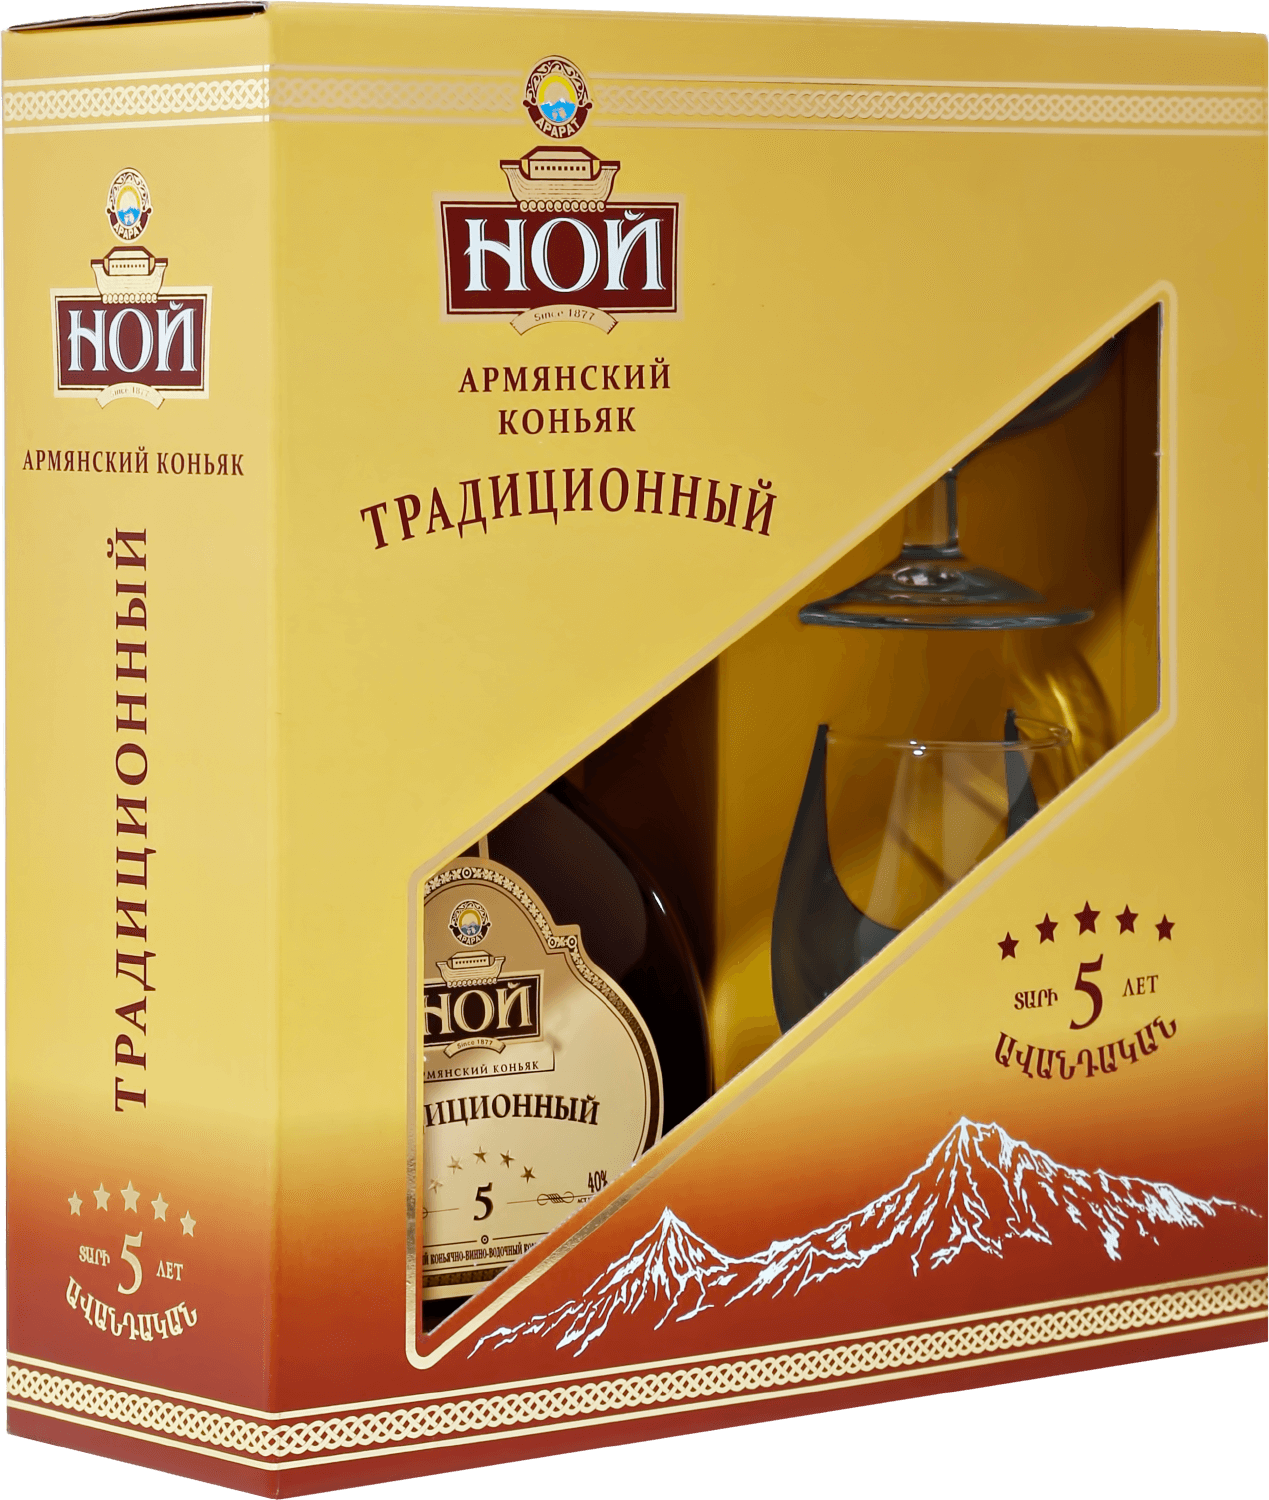 Noy Tradicionniy Armenian Brandy 5 y.o. in gift box with two glasses